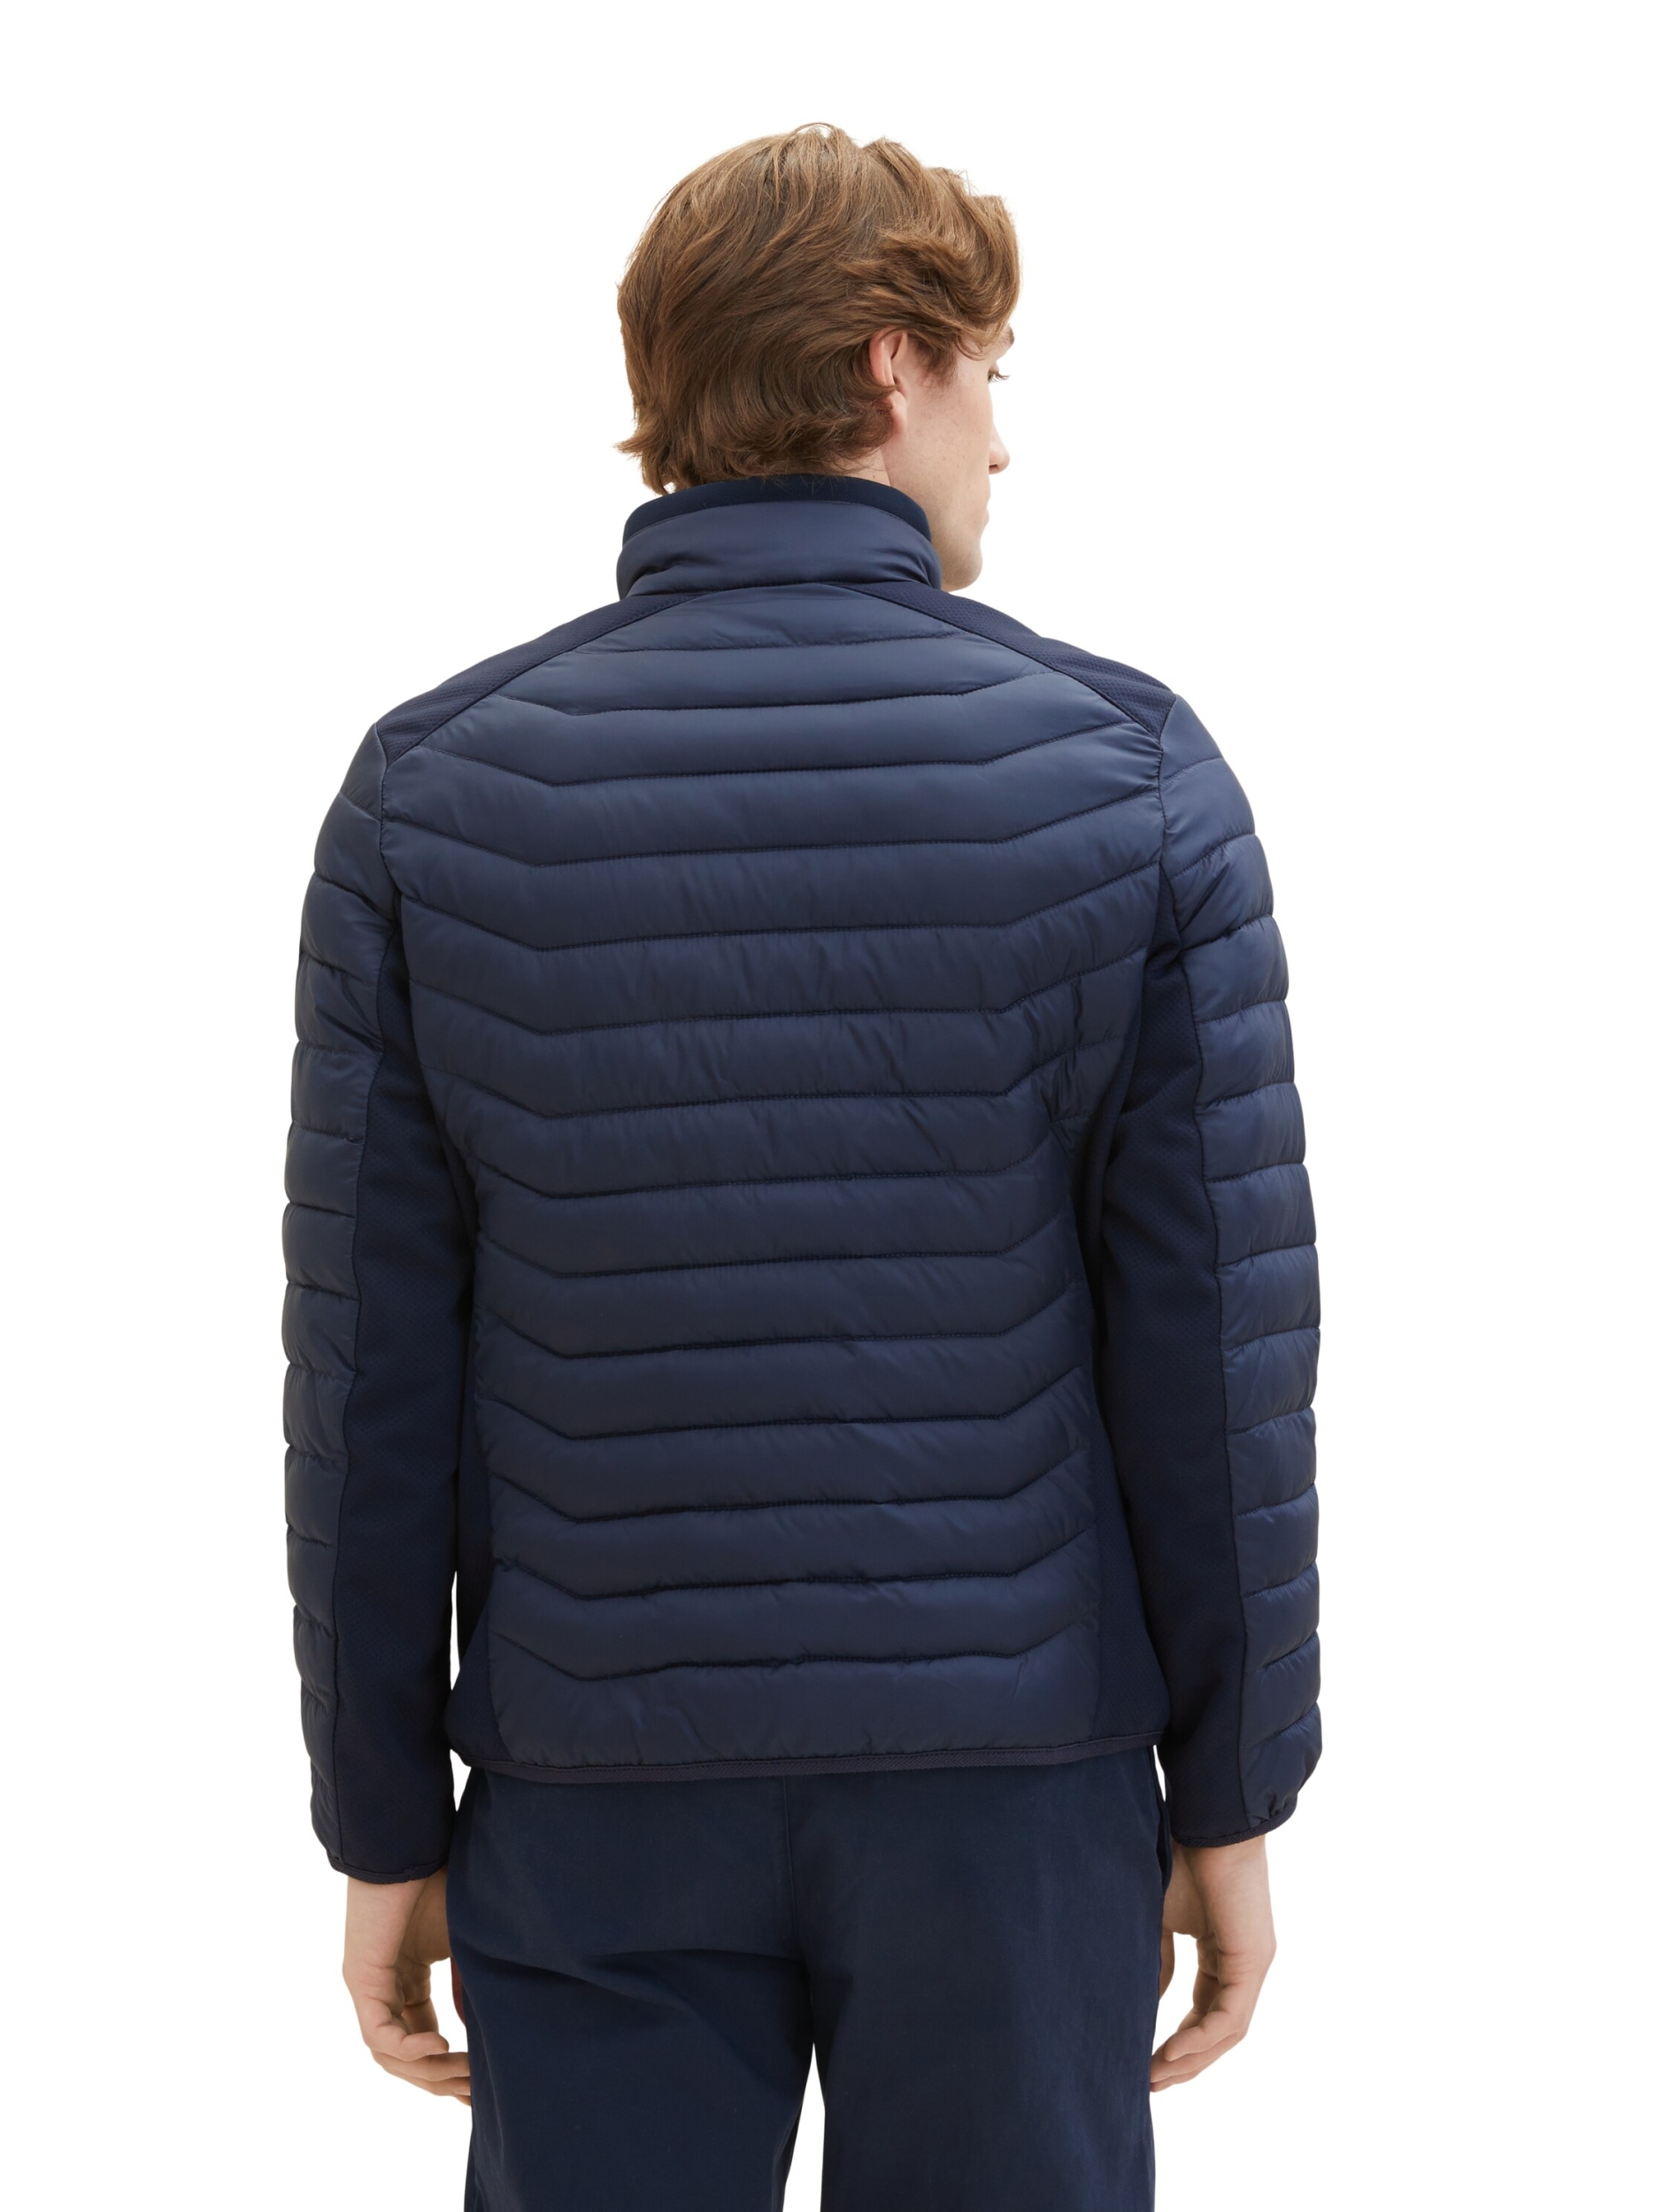 TOM TAILOR hybrid jacket kaufen online